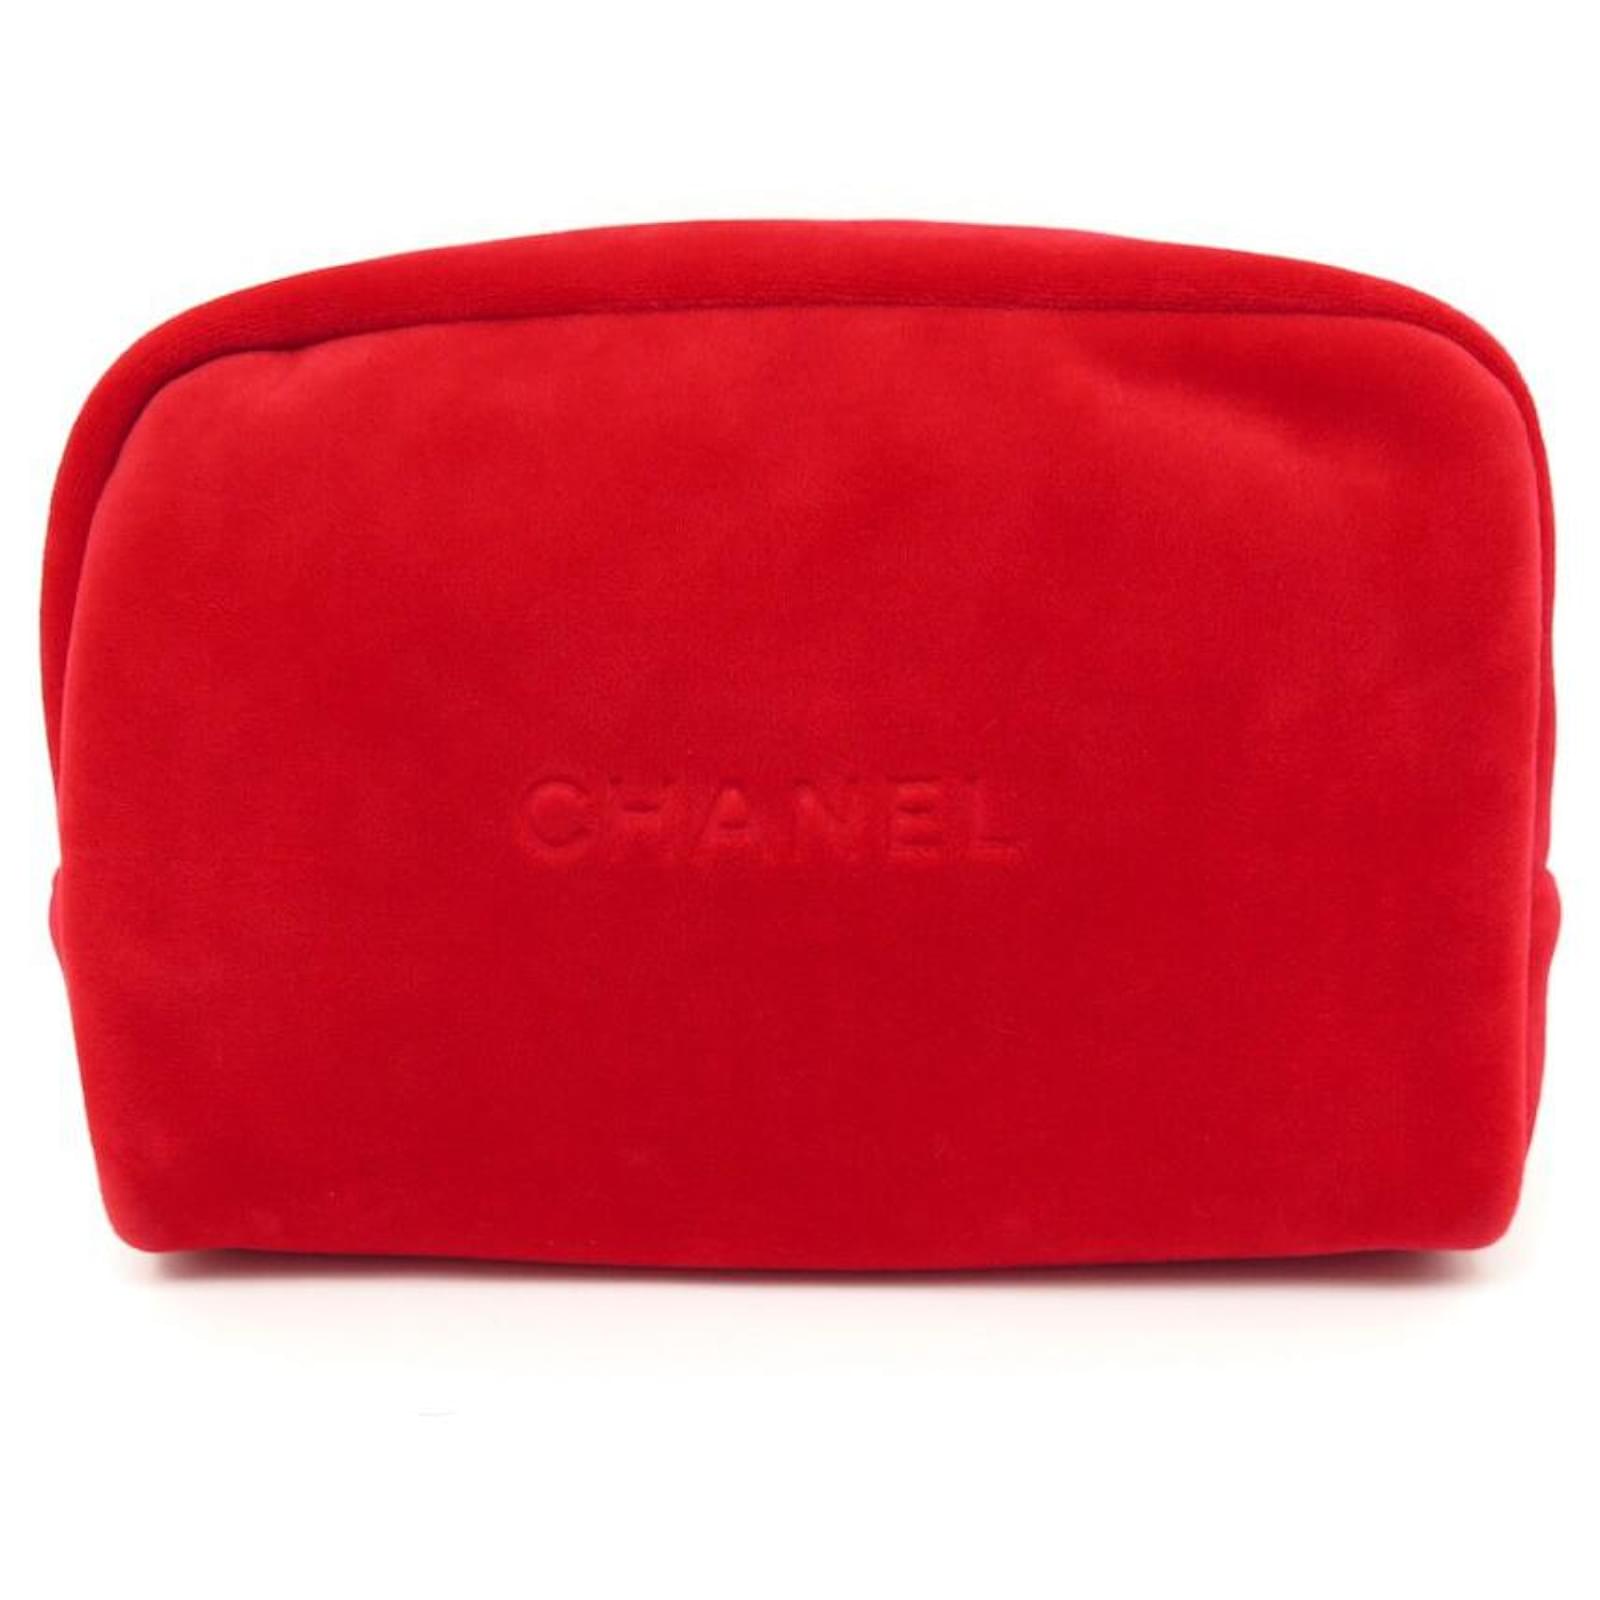 chanel red velvet makeup bag